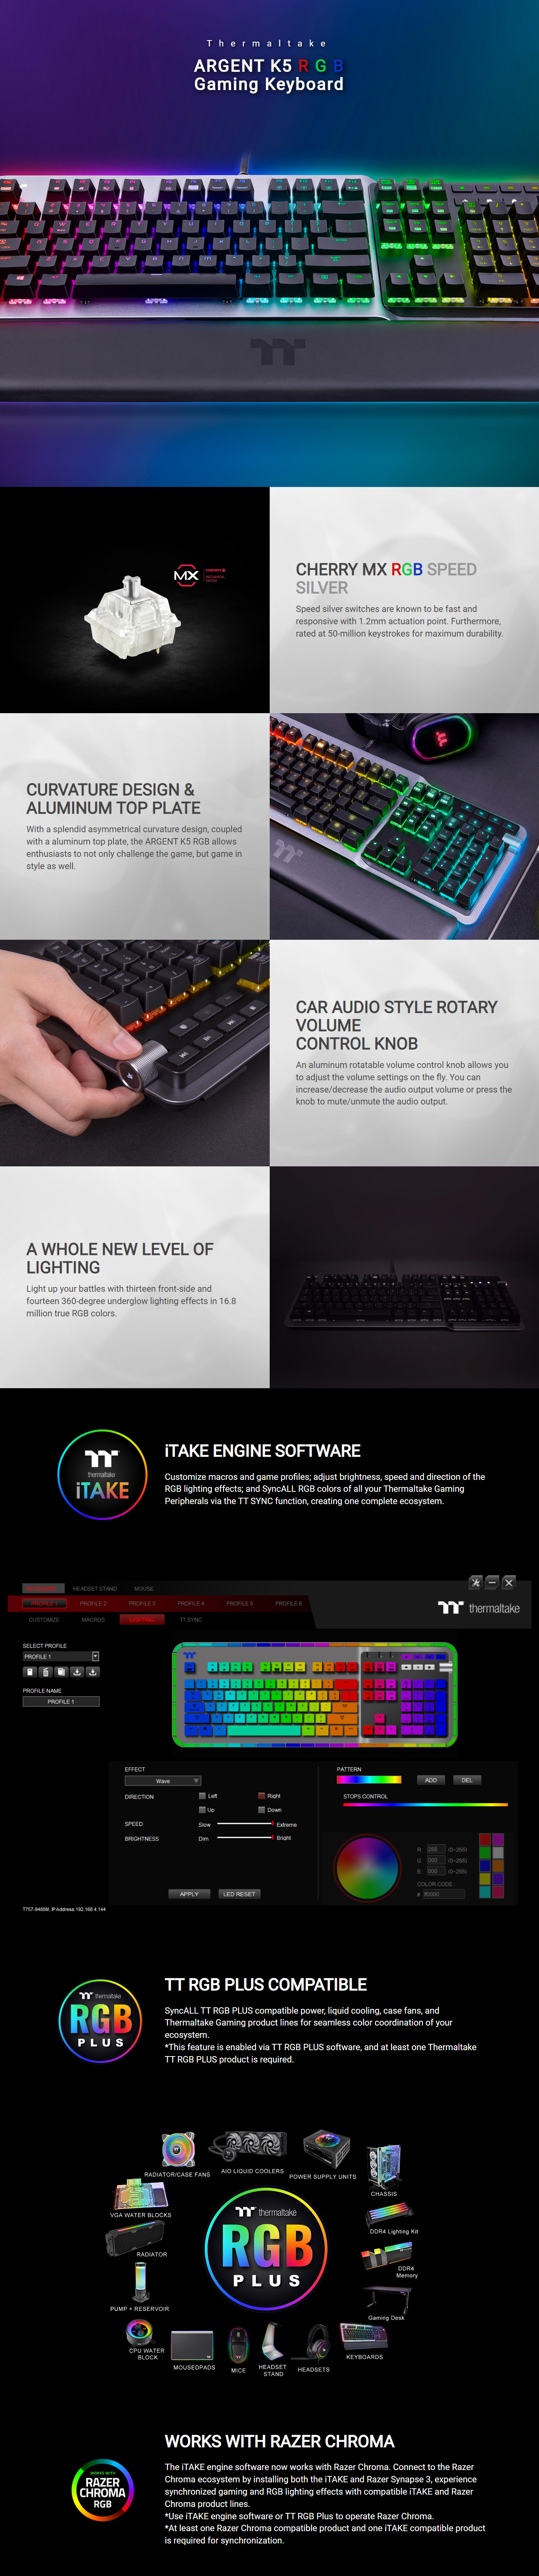 Keyboards-Thermaltake-Argent-K5-RGB-Mechanical-Gaming-Keyboard-Cherry-MX-Speed-Silver-5